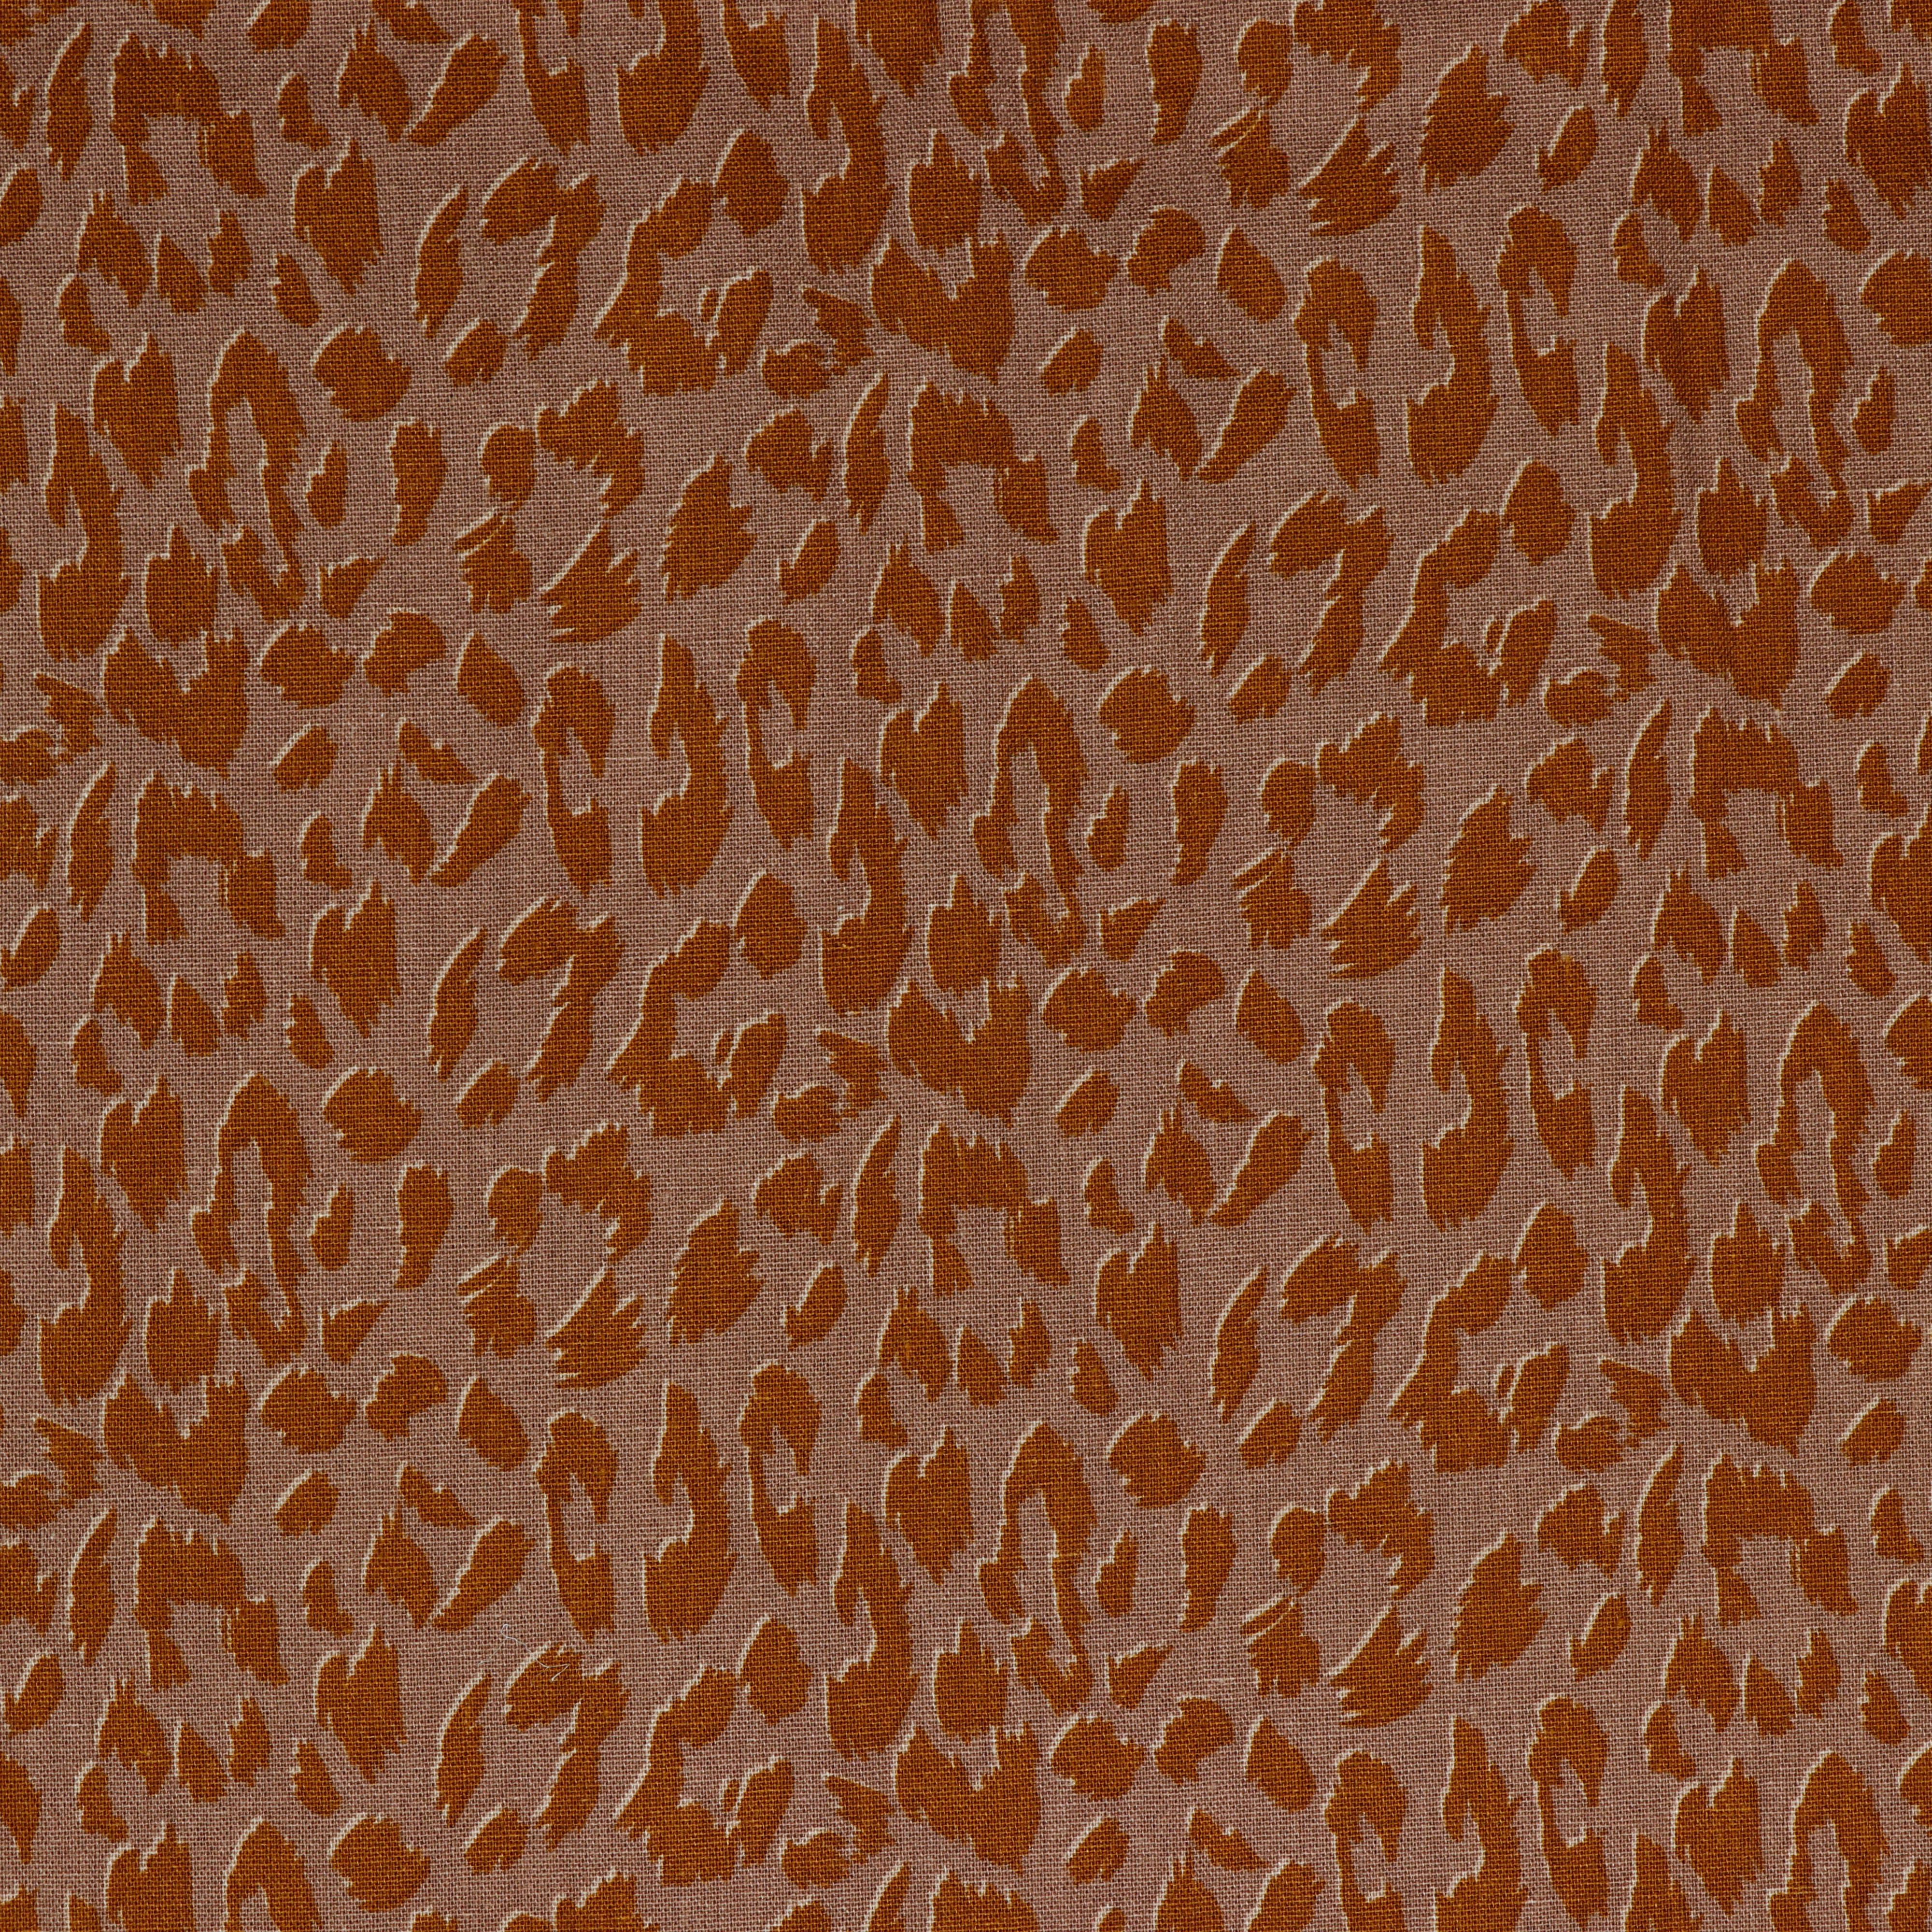 Animal Print on Mauve Linen Viscose Blend Fabric